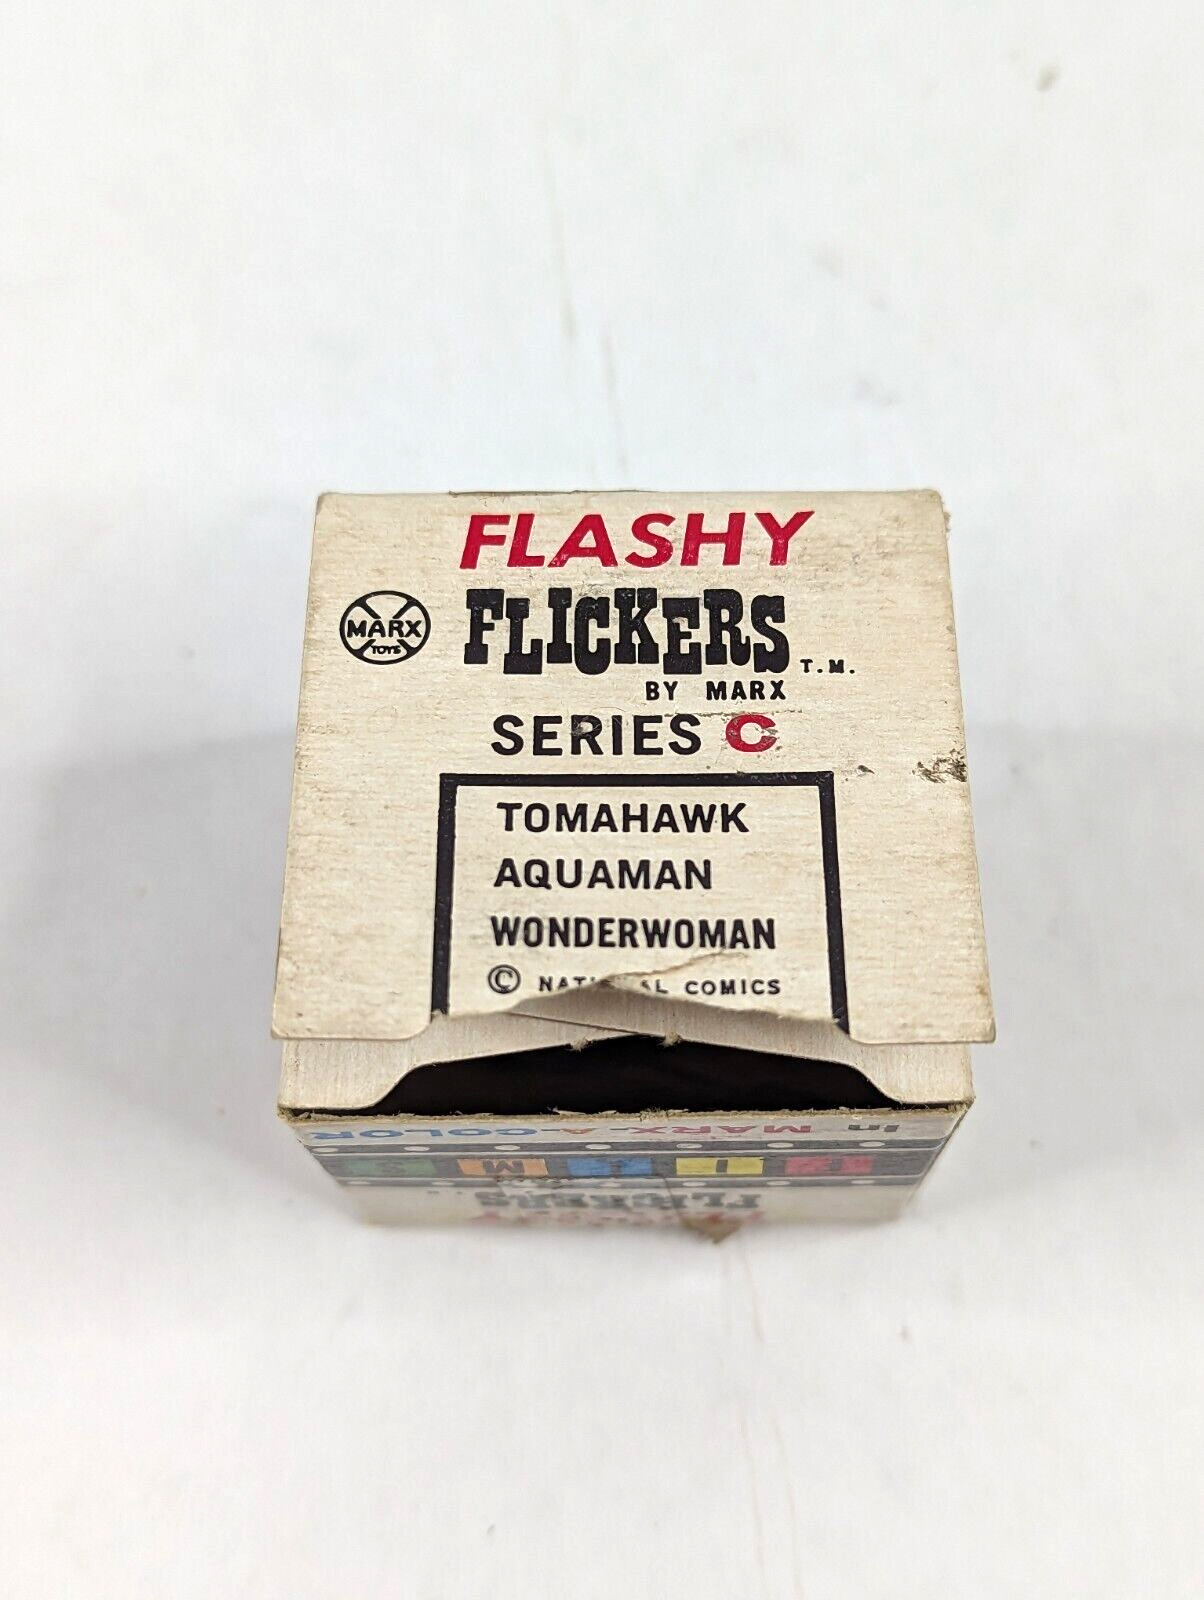 intage 1960s MARX Flashy Flickers Films Series C Aquaman Wonderwoman Tomahawk